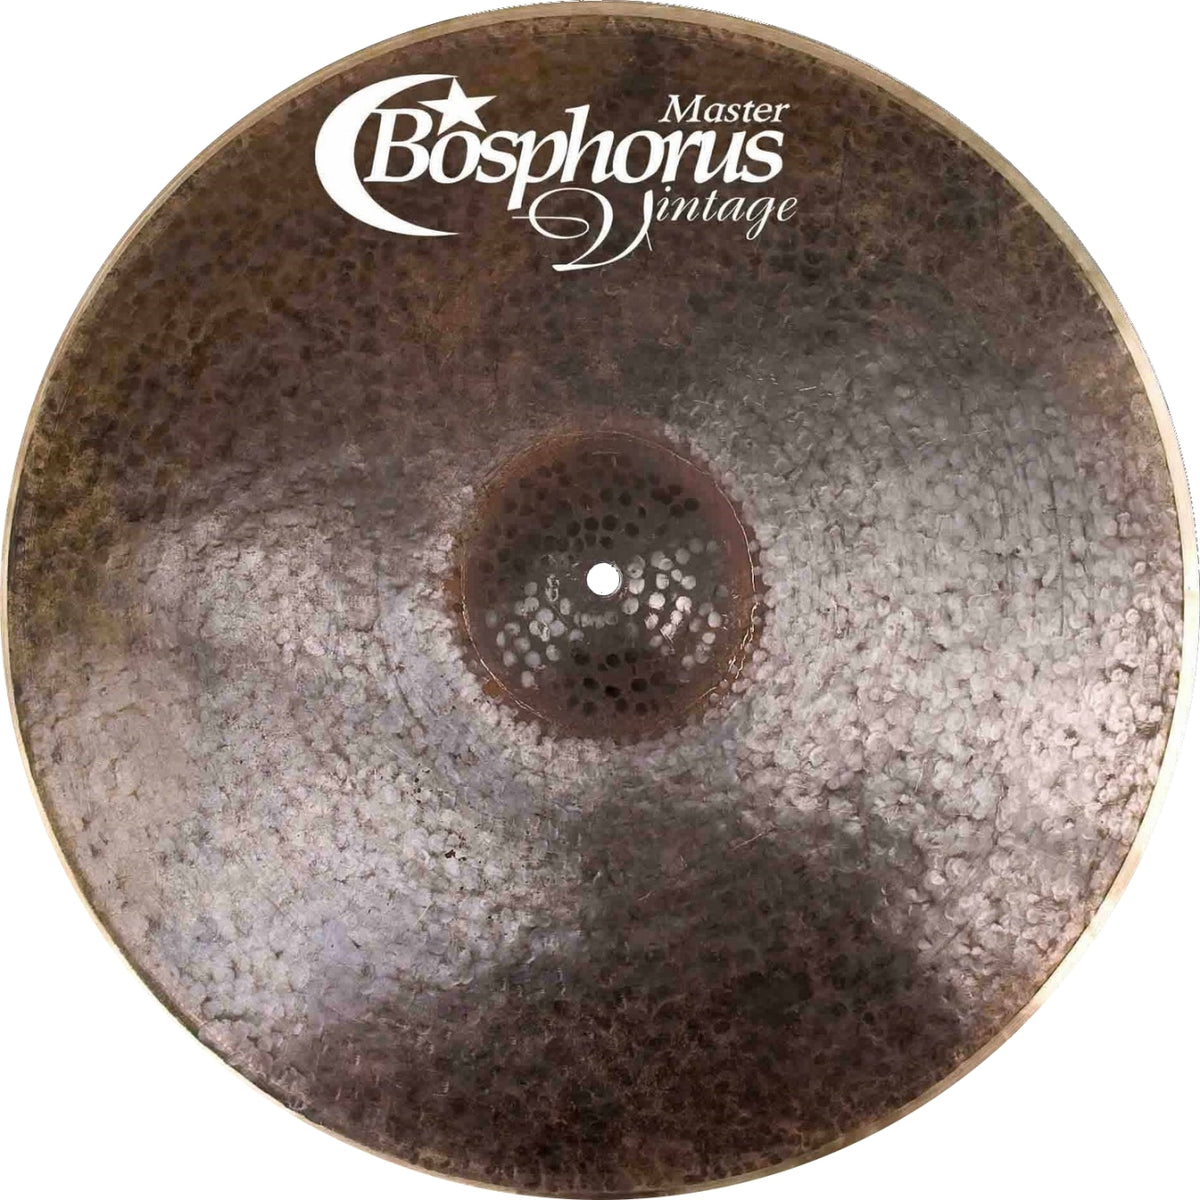 Bosphorus Cymbals Master Vintage – Sounds Anatolian